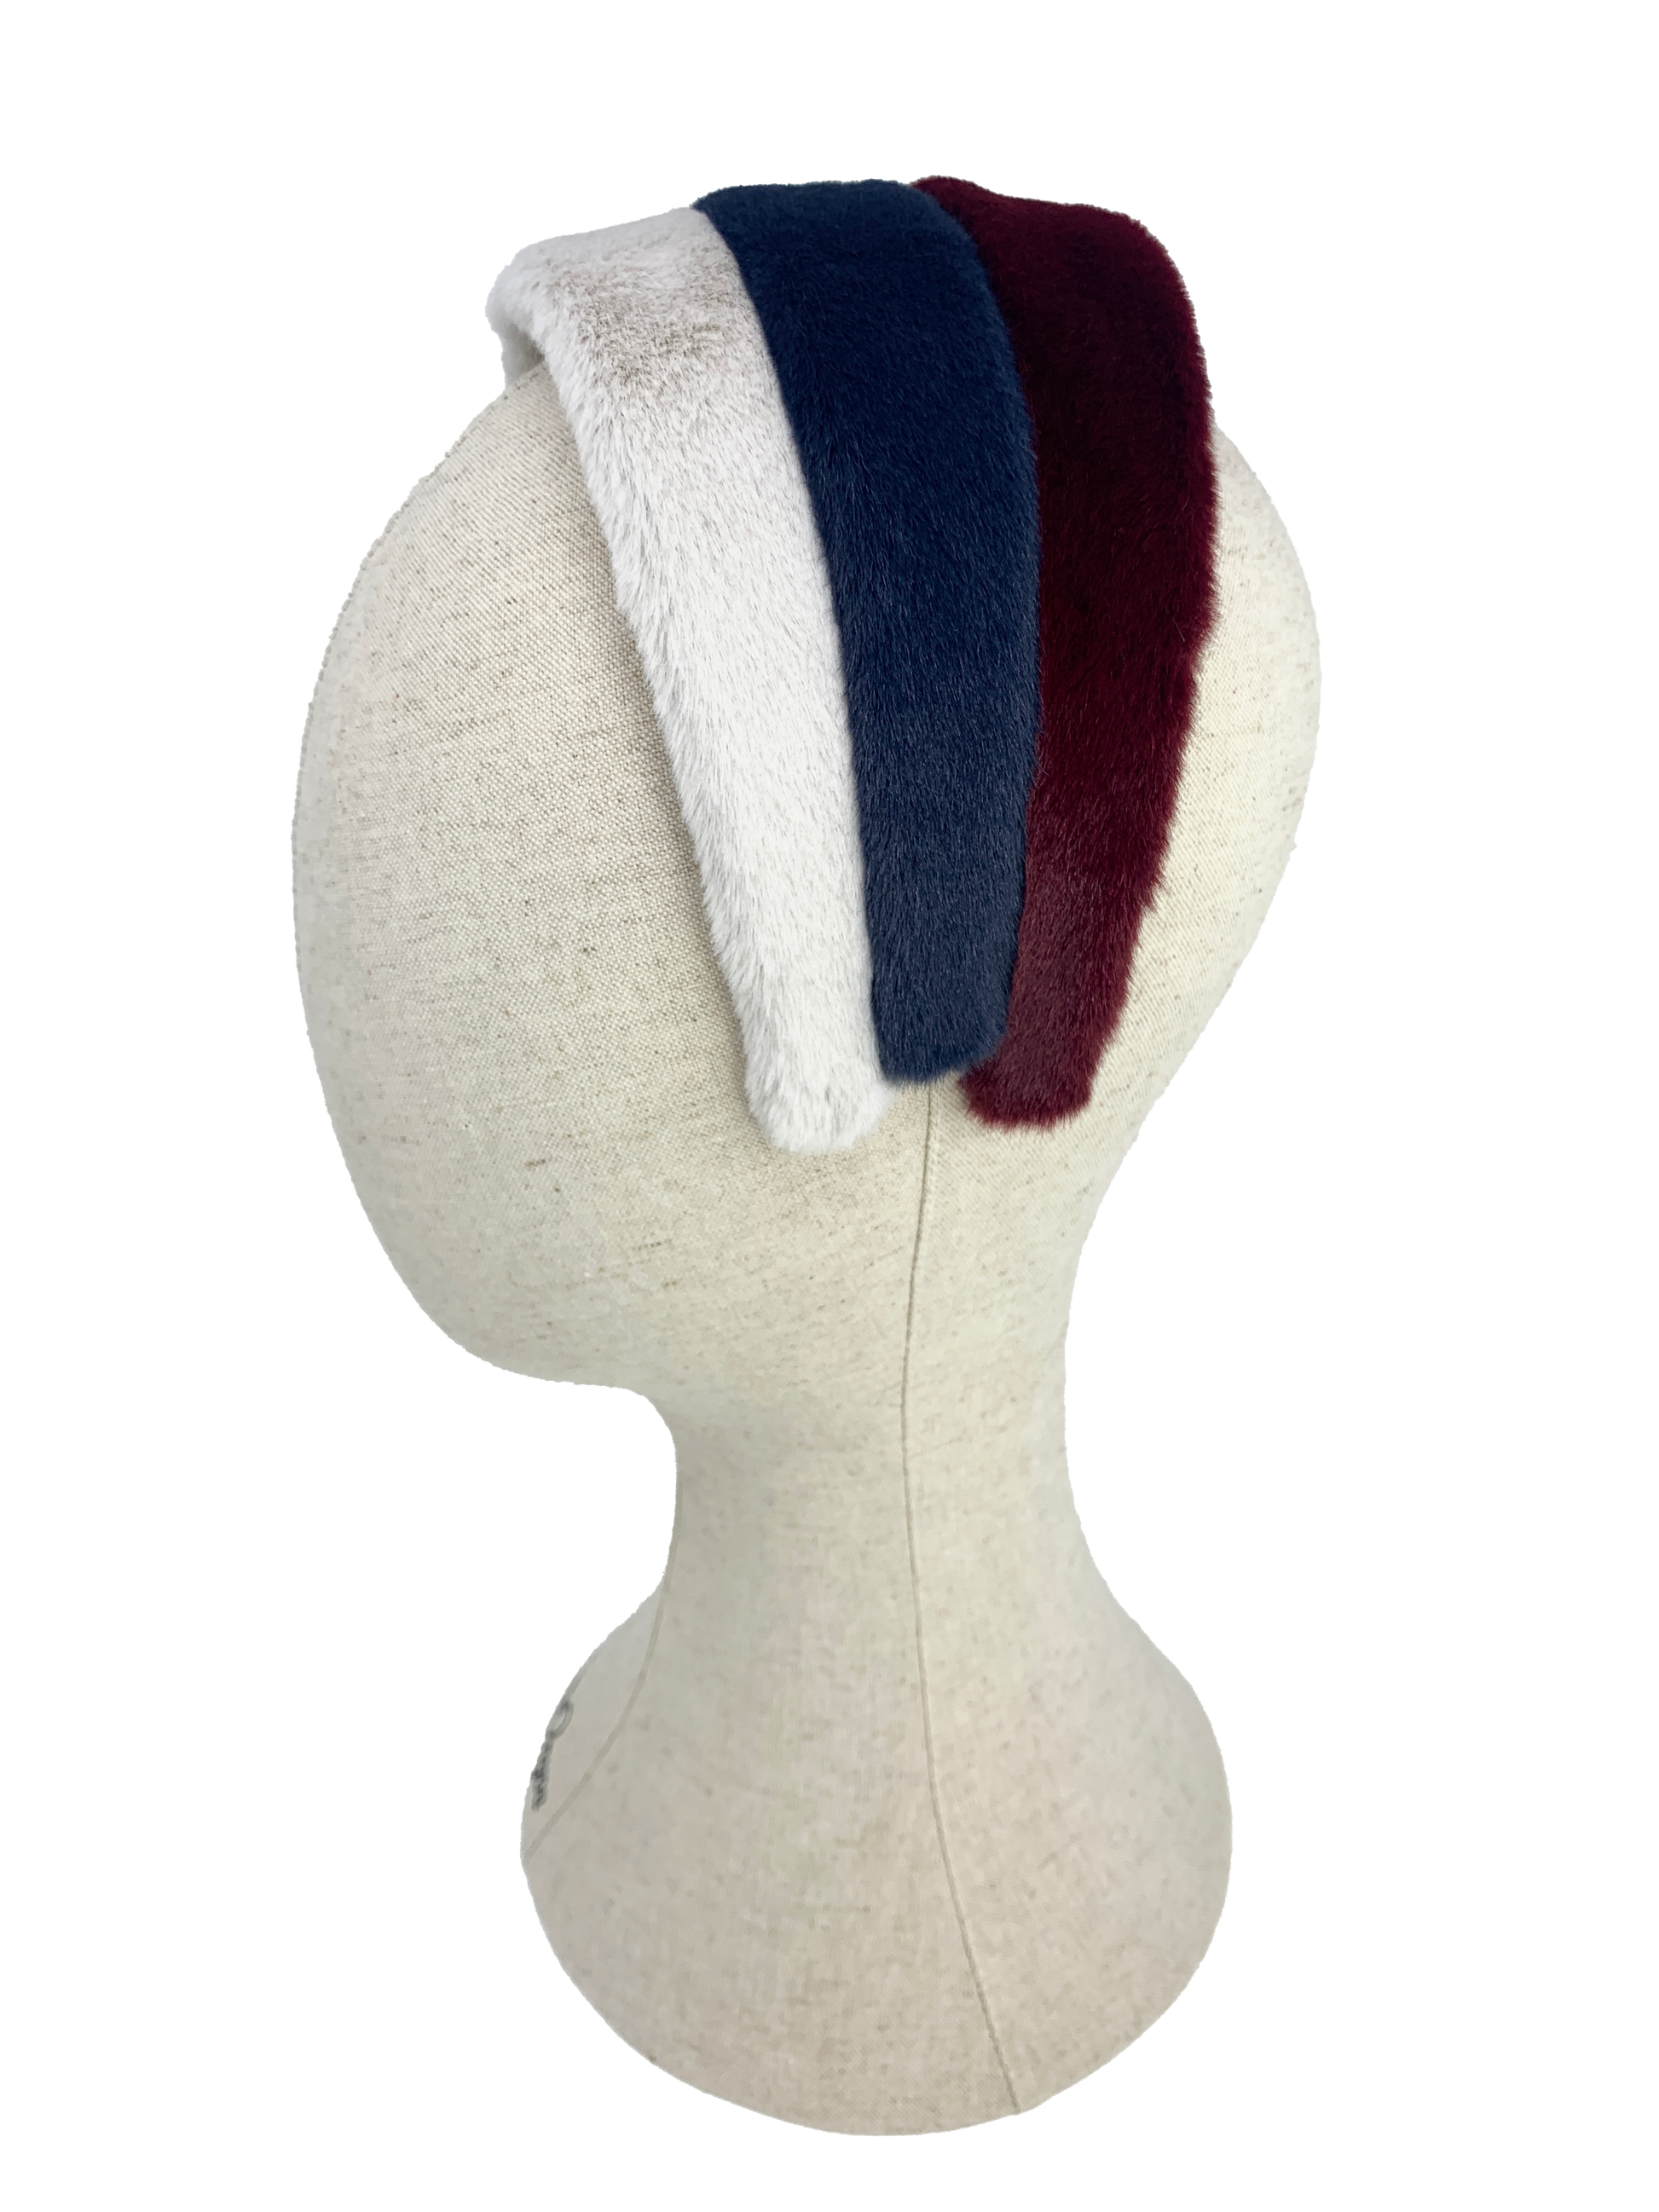 3 Furry headband in 3 colors, white, dark blue and dark red